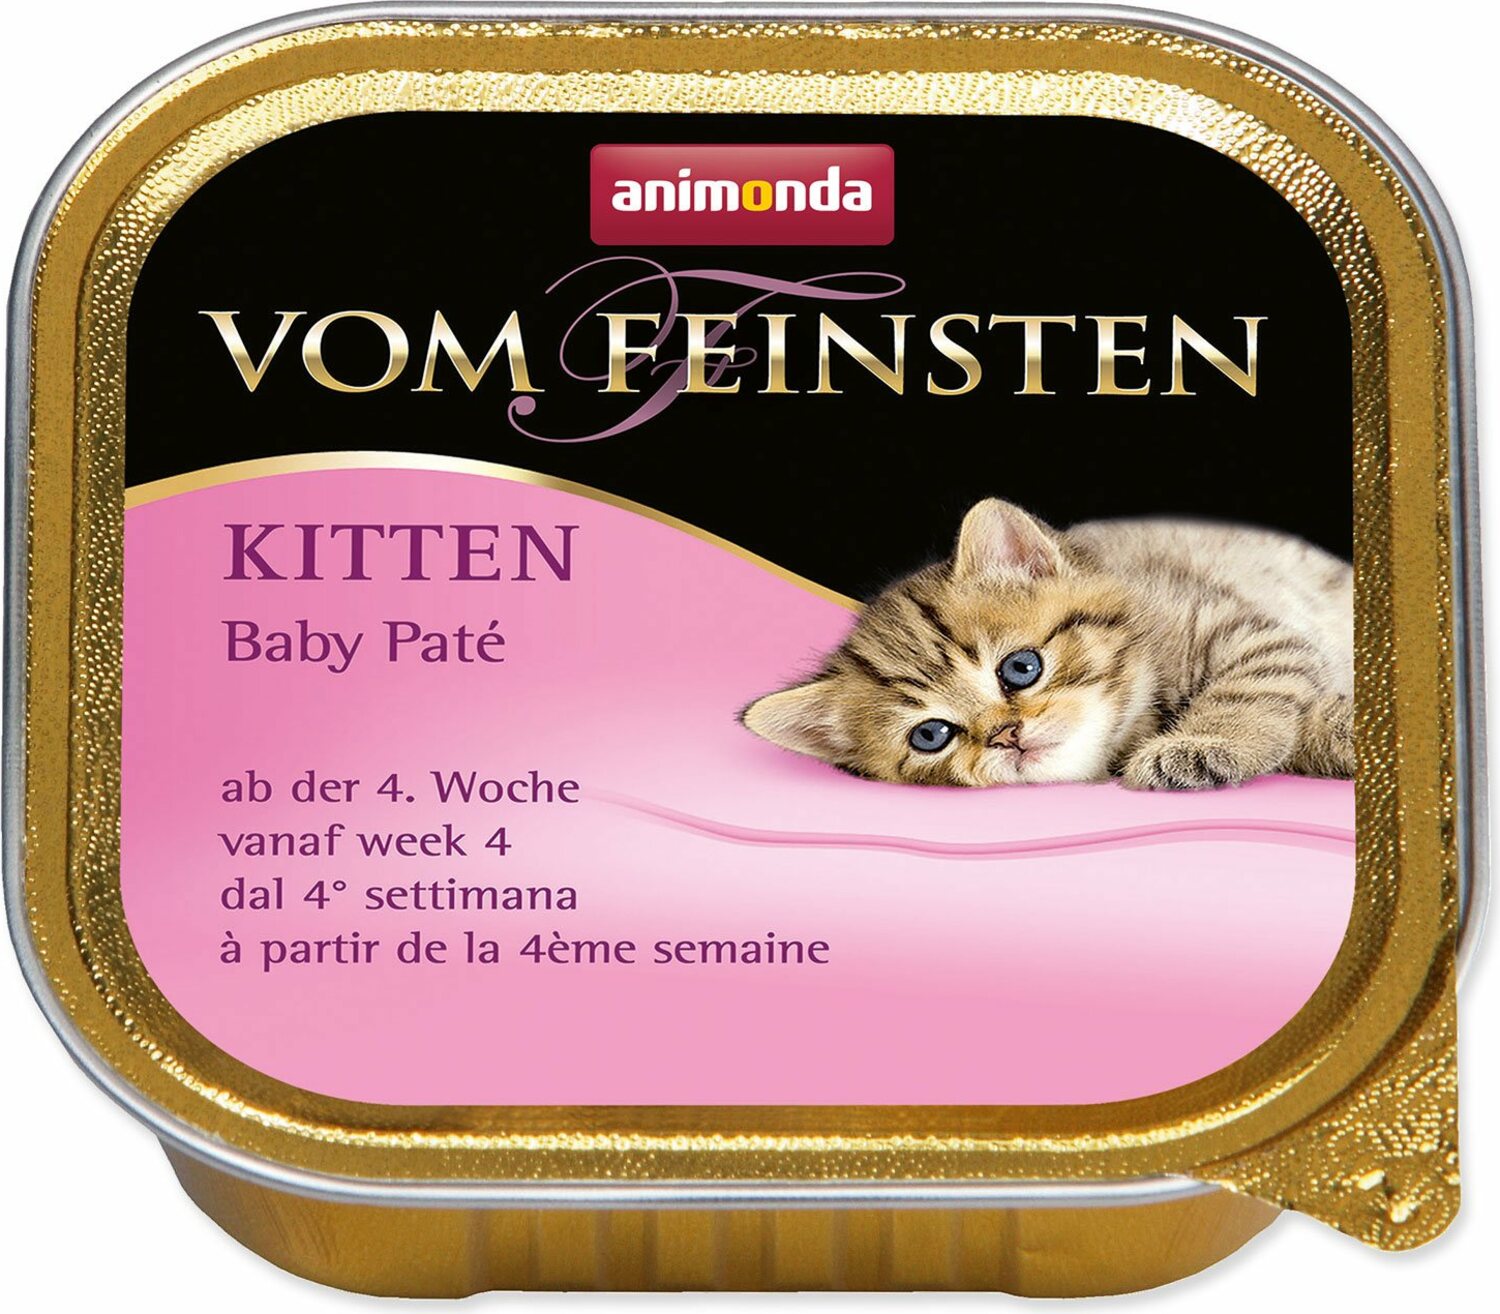 Paštika Animonda Vom Feinstein Kitten masová směs 100g